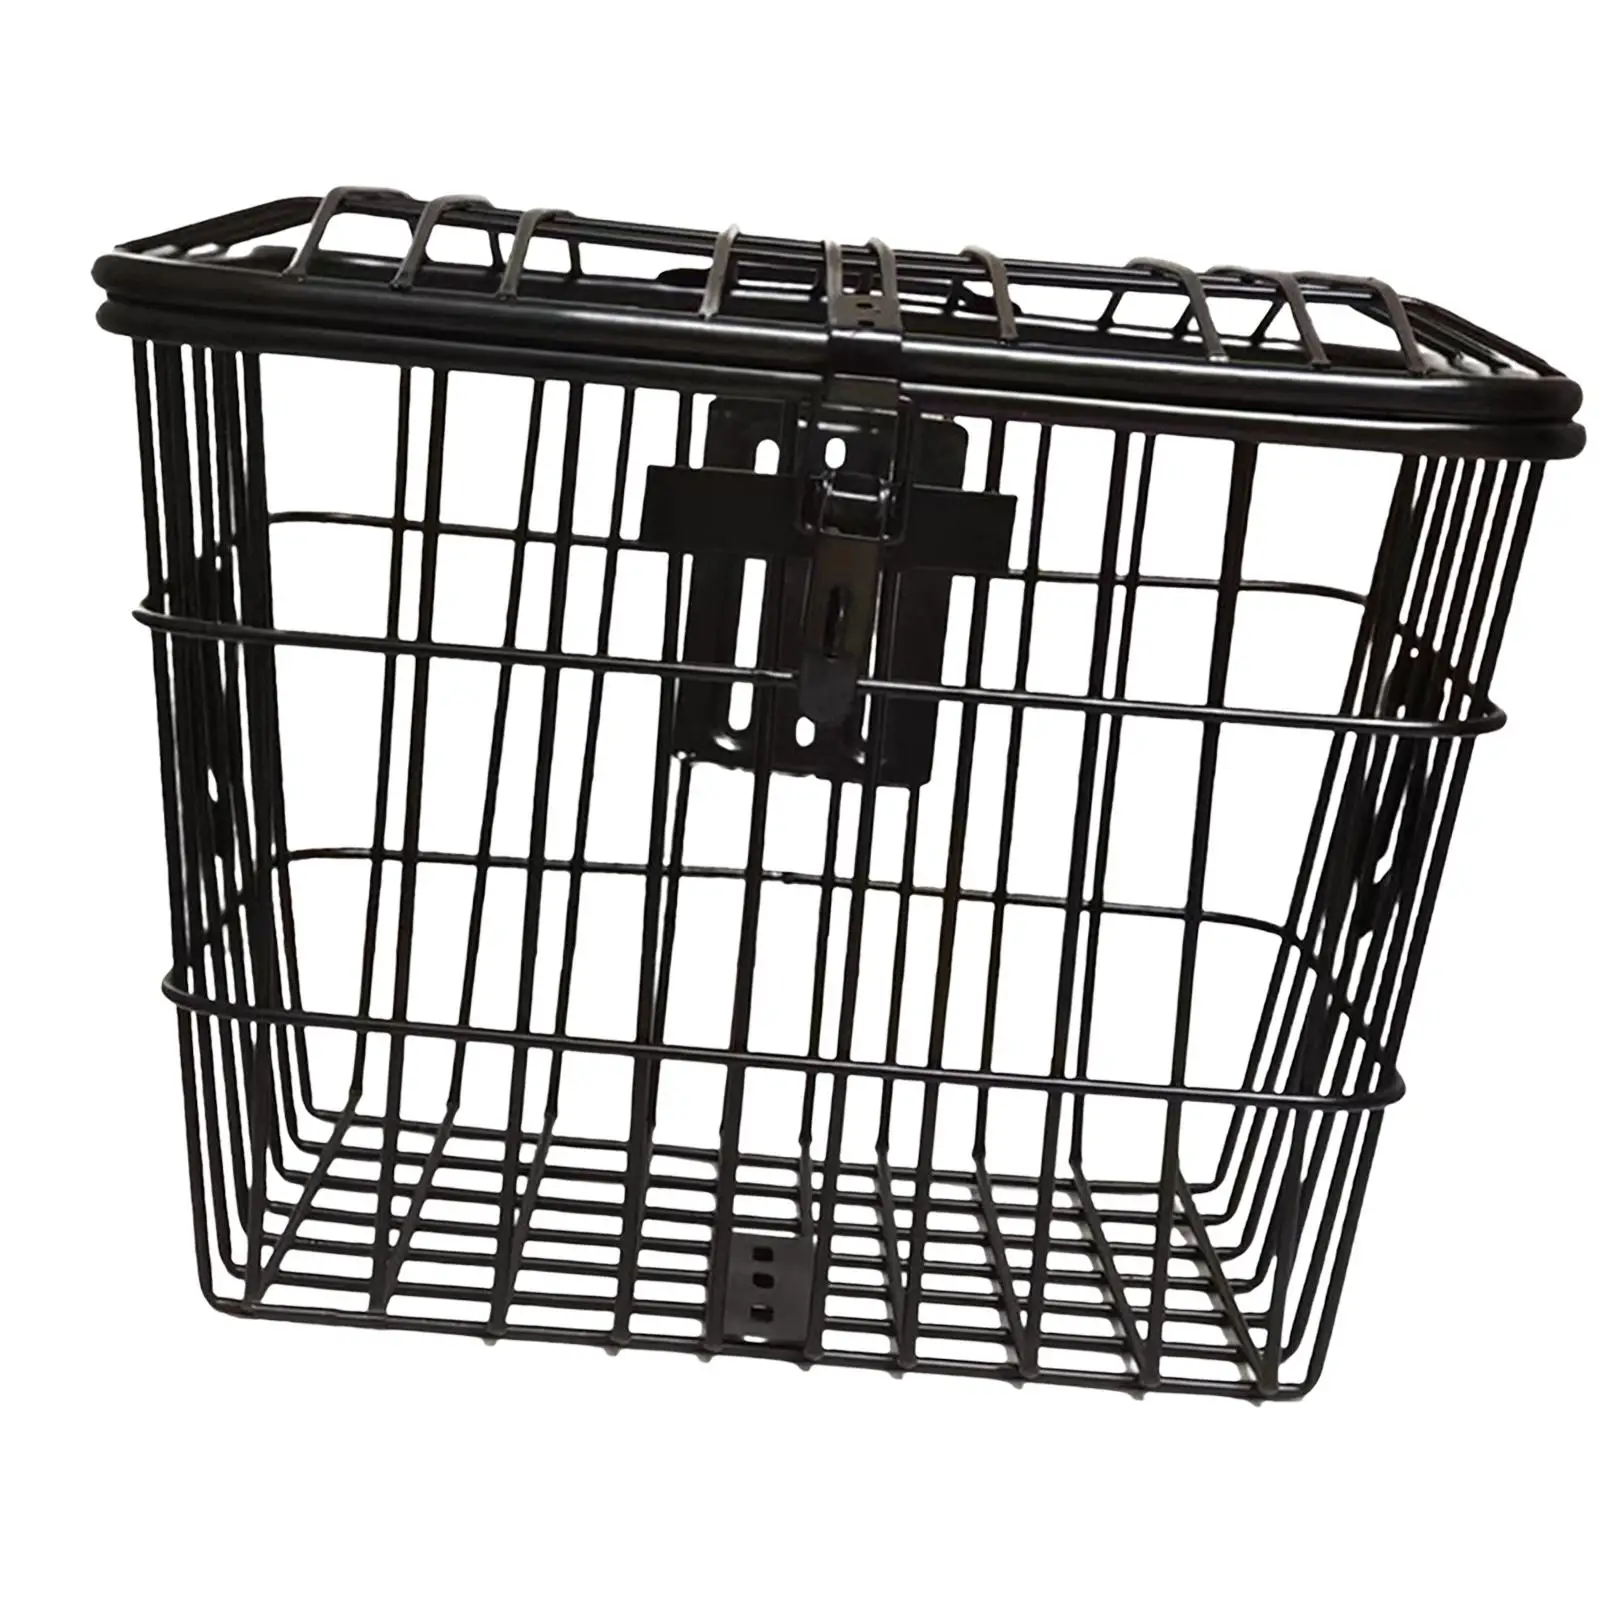 Universal Bike Basket Rustproof Storage Box Durable for Folding Bikes Electric Vehicles